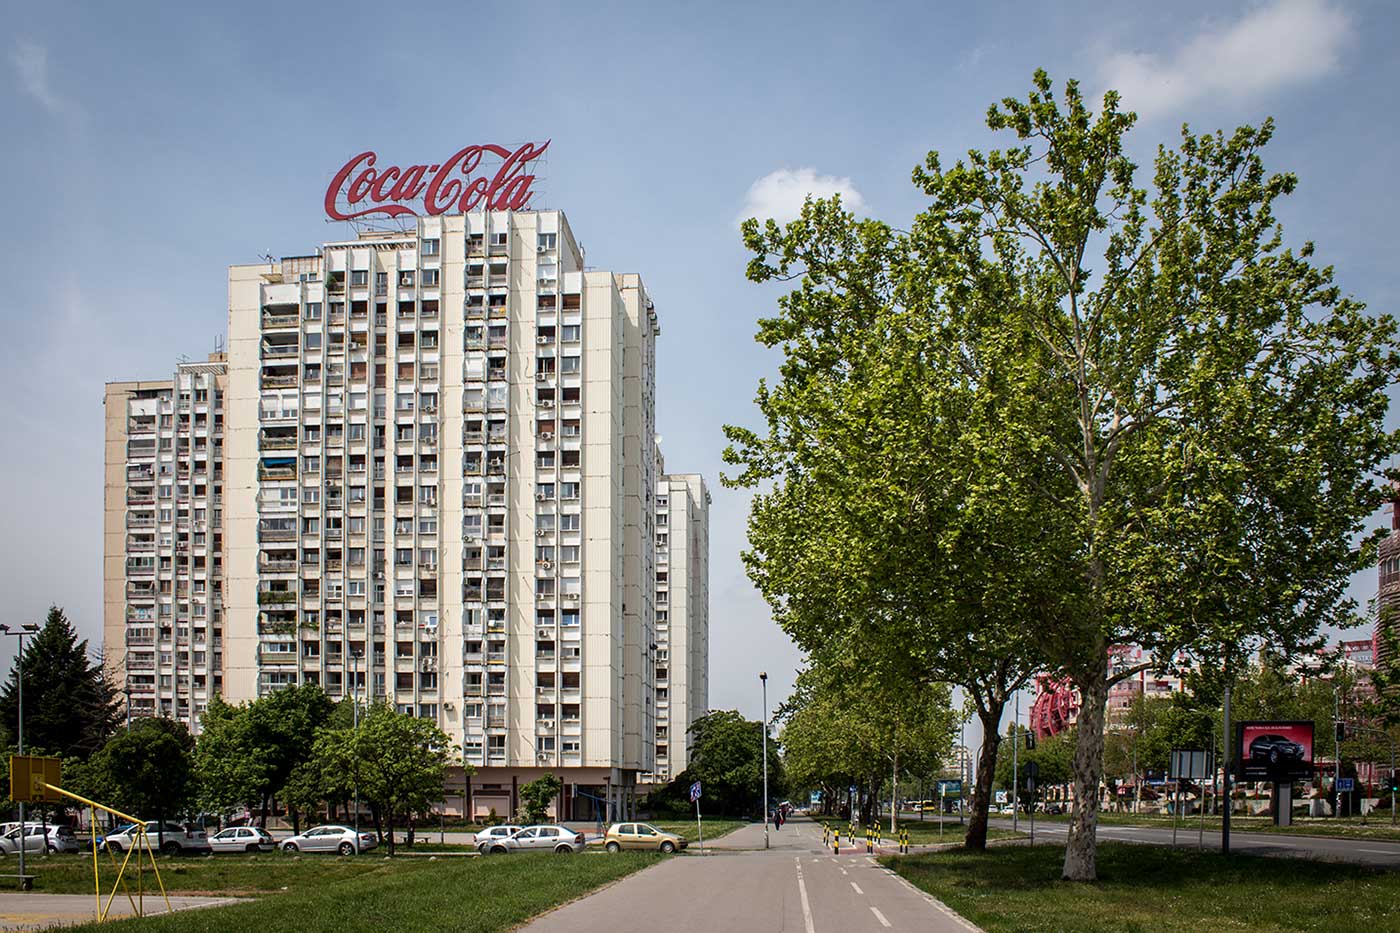 A cluster of residential buildings on Blok 30, Novi Beograd.